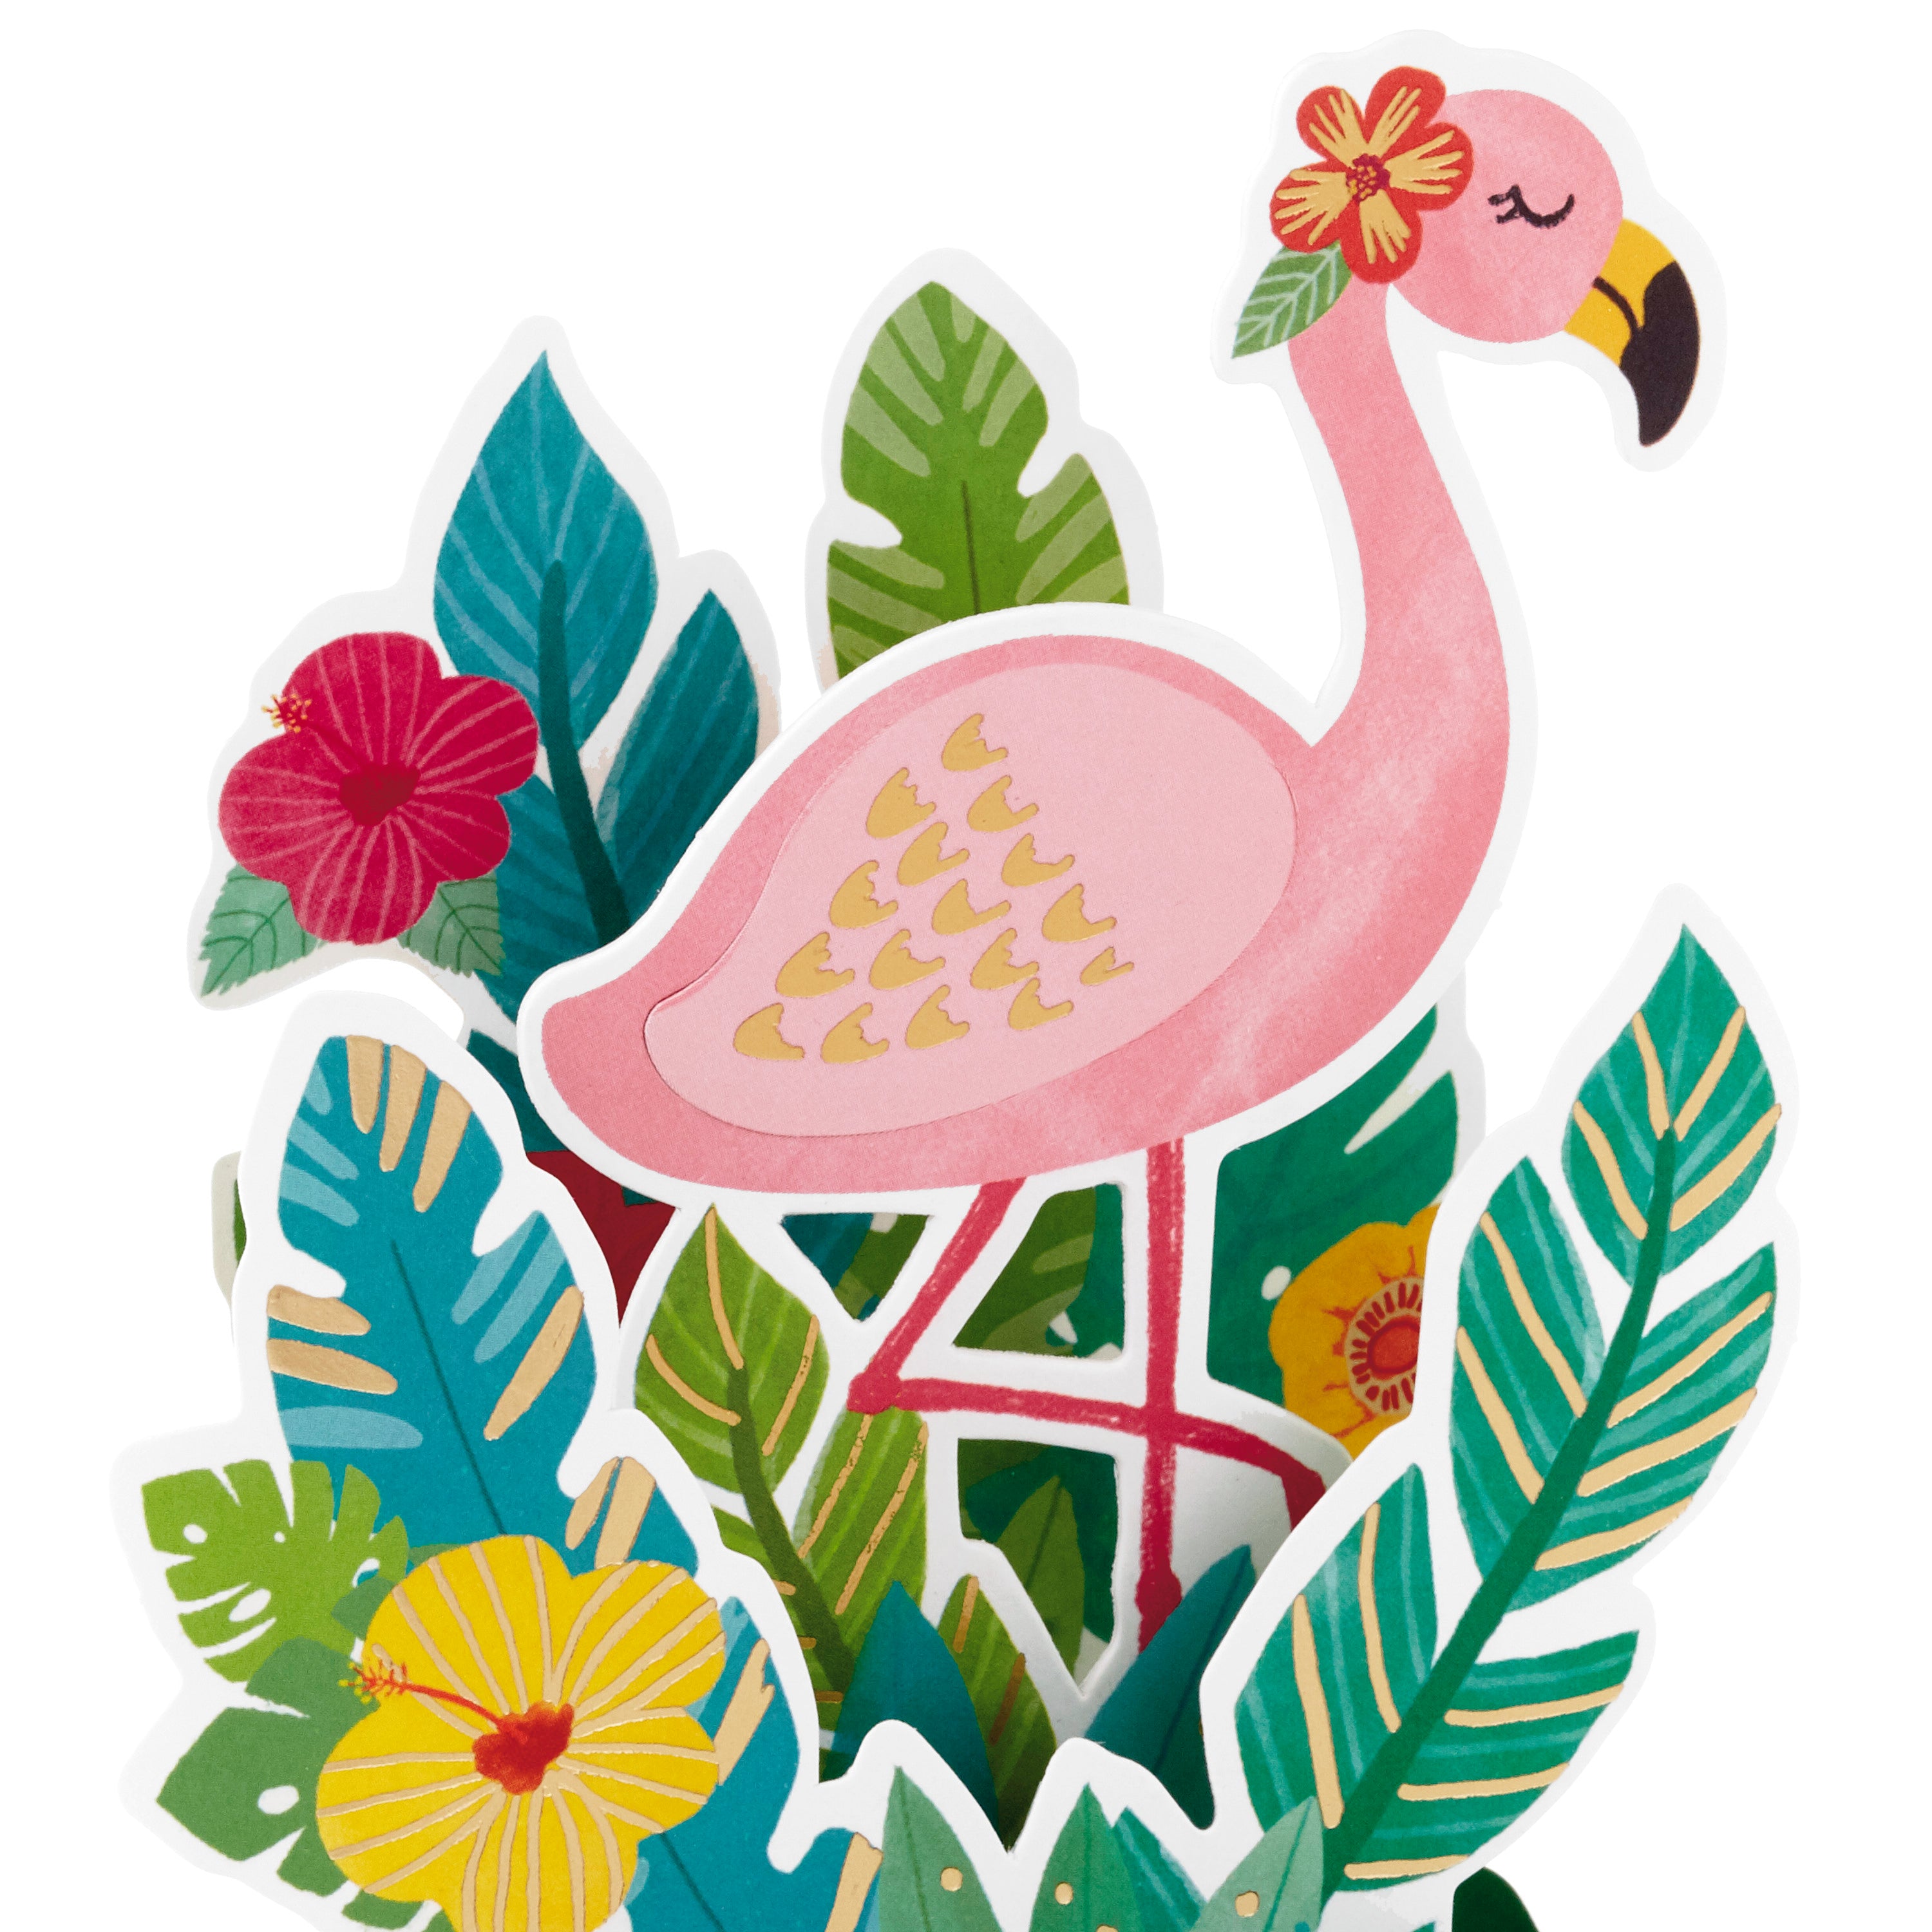 Hallmark Paper Wonder Pop Up Birthday Card, Thank You Card, Encouragement Card, All Occasion Card (Flamingo)